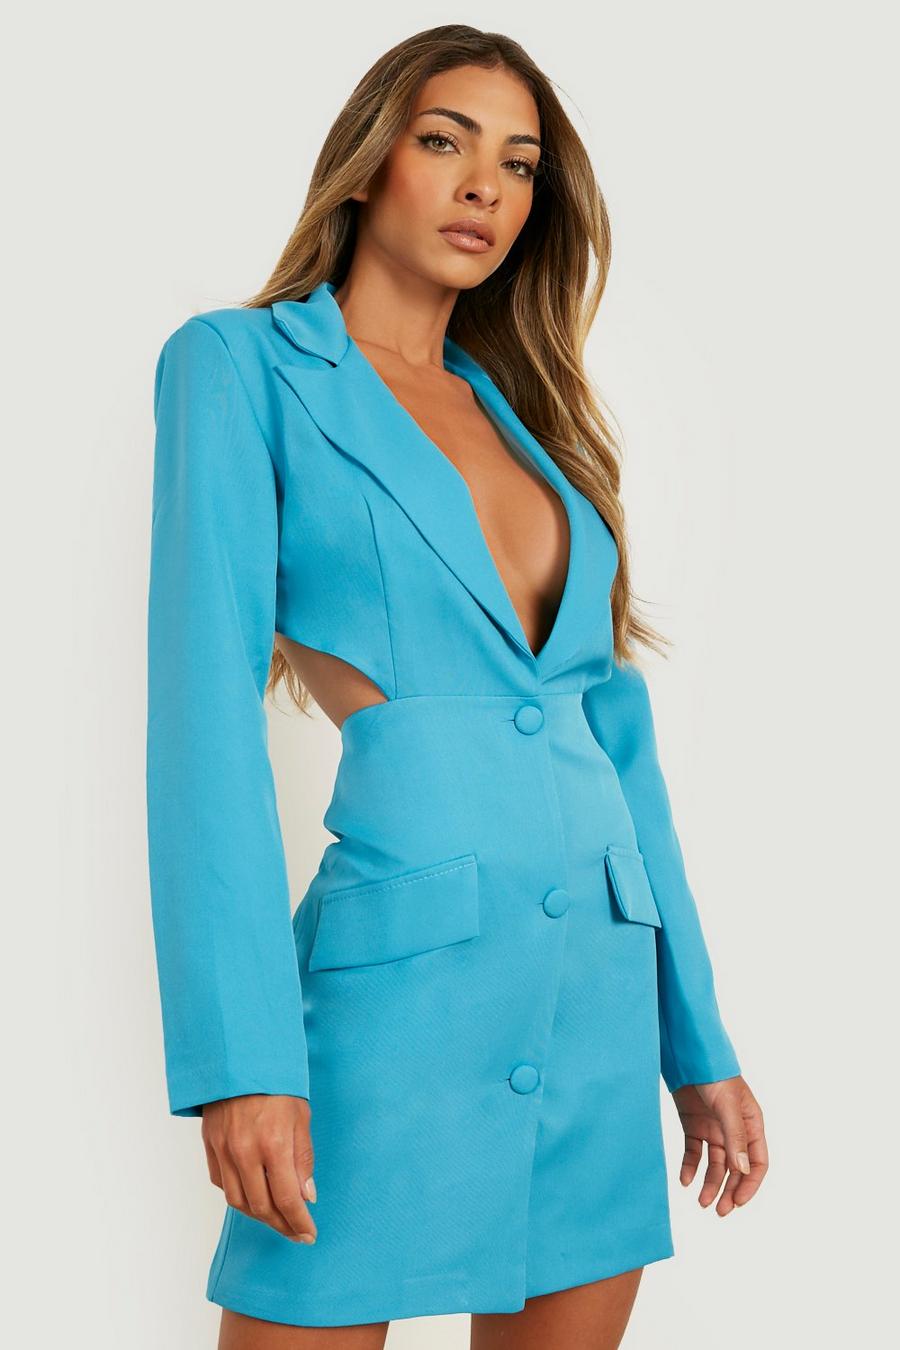 Azure blue Open Back Tailored Blazer Dress